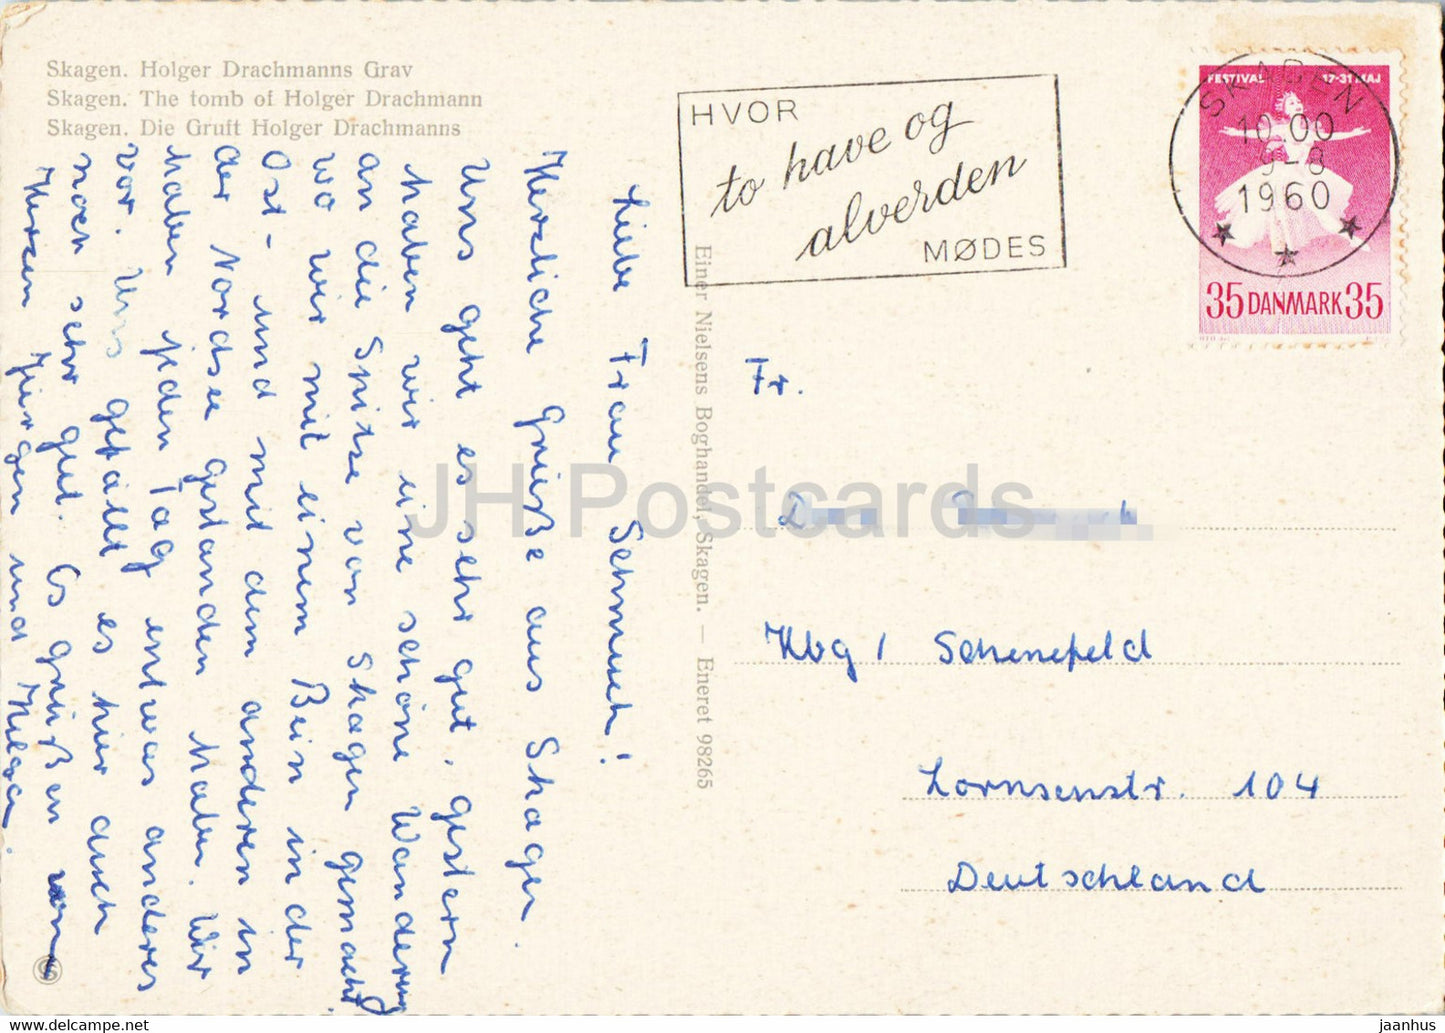 Skagen - Le Tombeau de Holger Drachmann - carte postale ancienne - 1960 - Danemark - utilisé